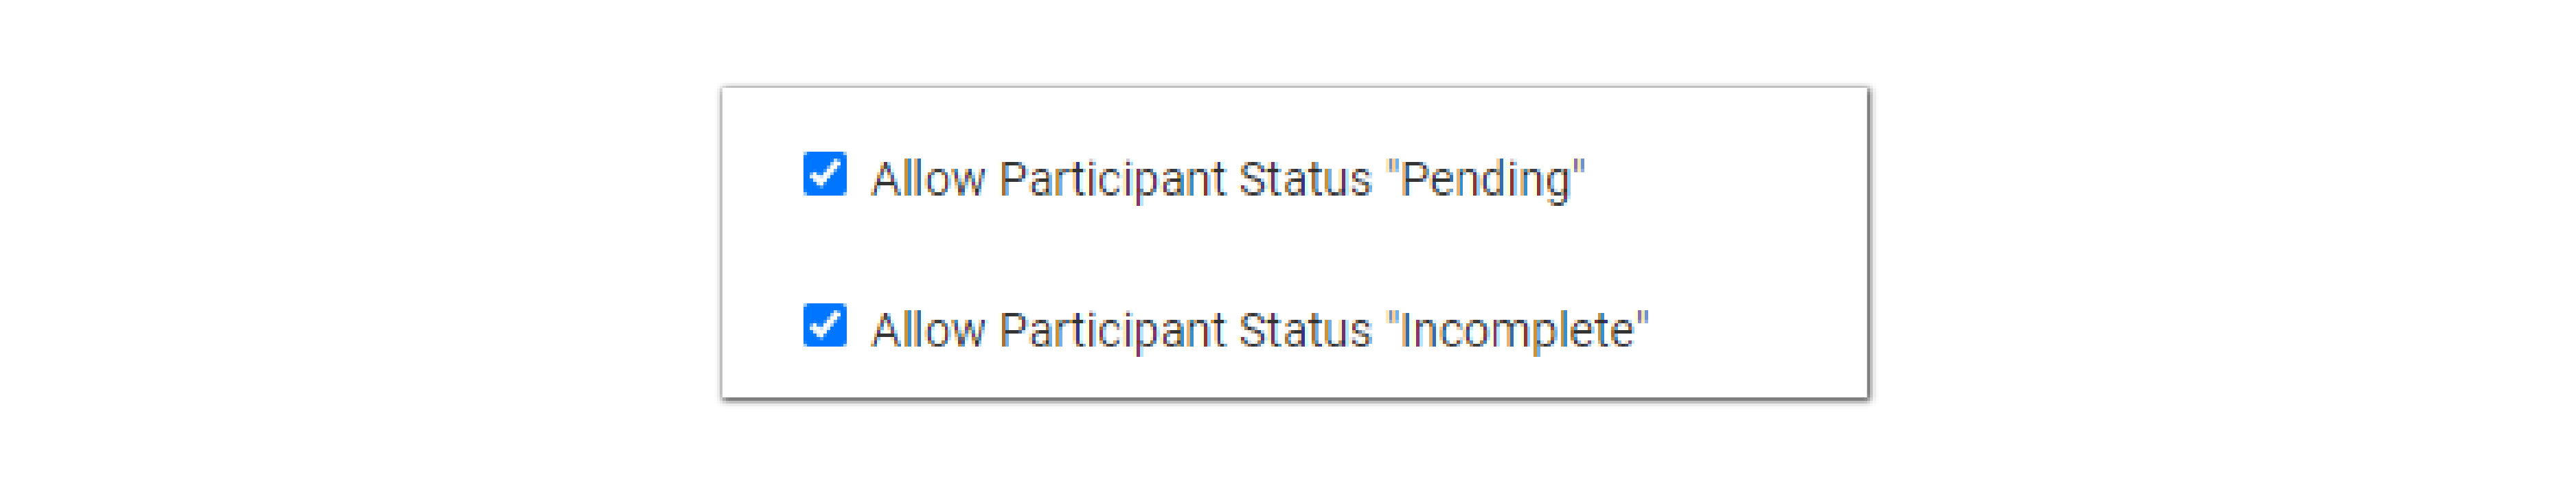 Options for Participant Status